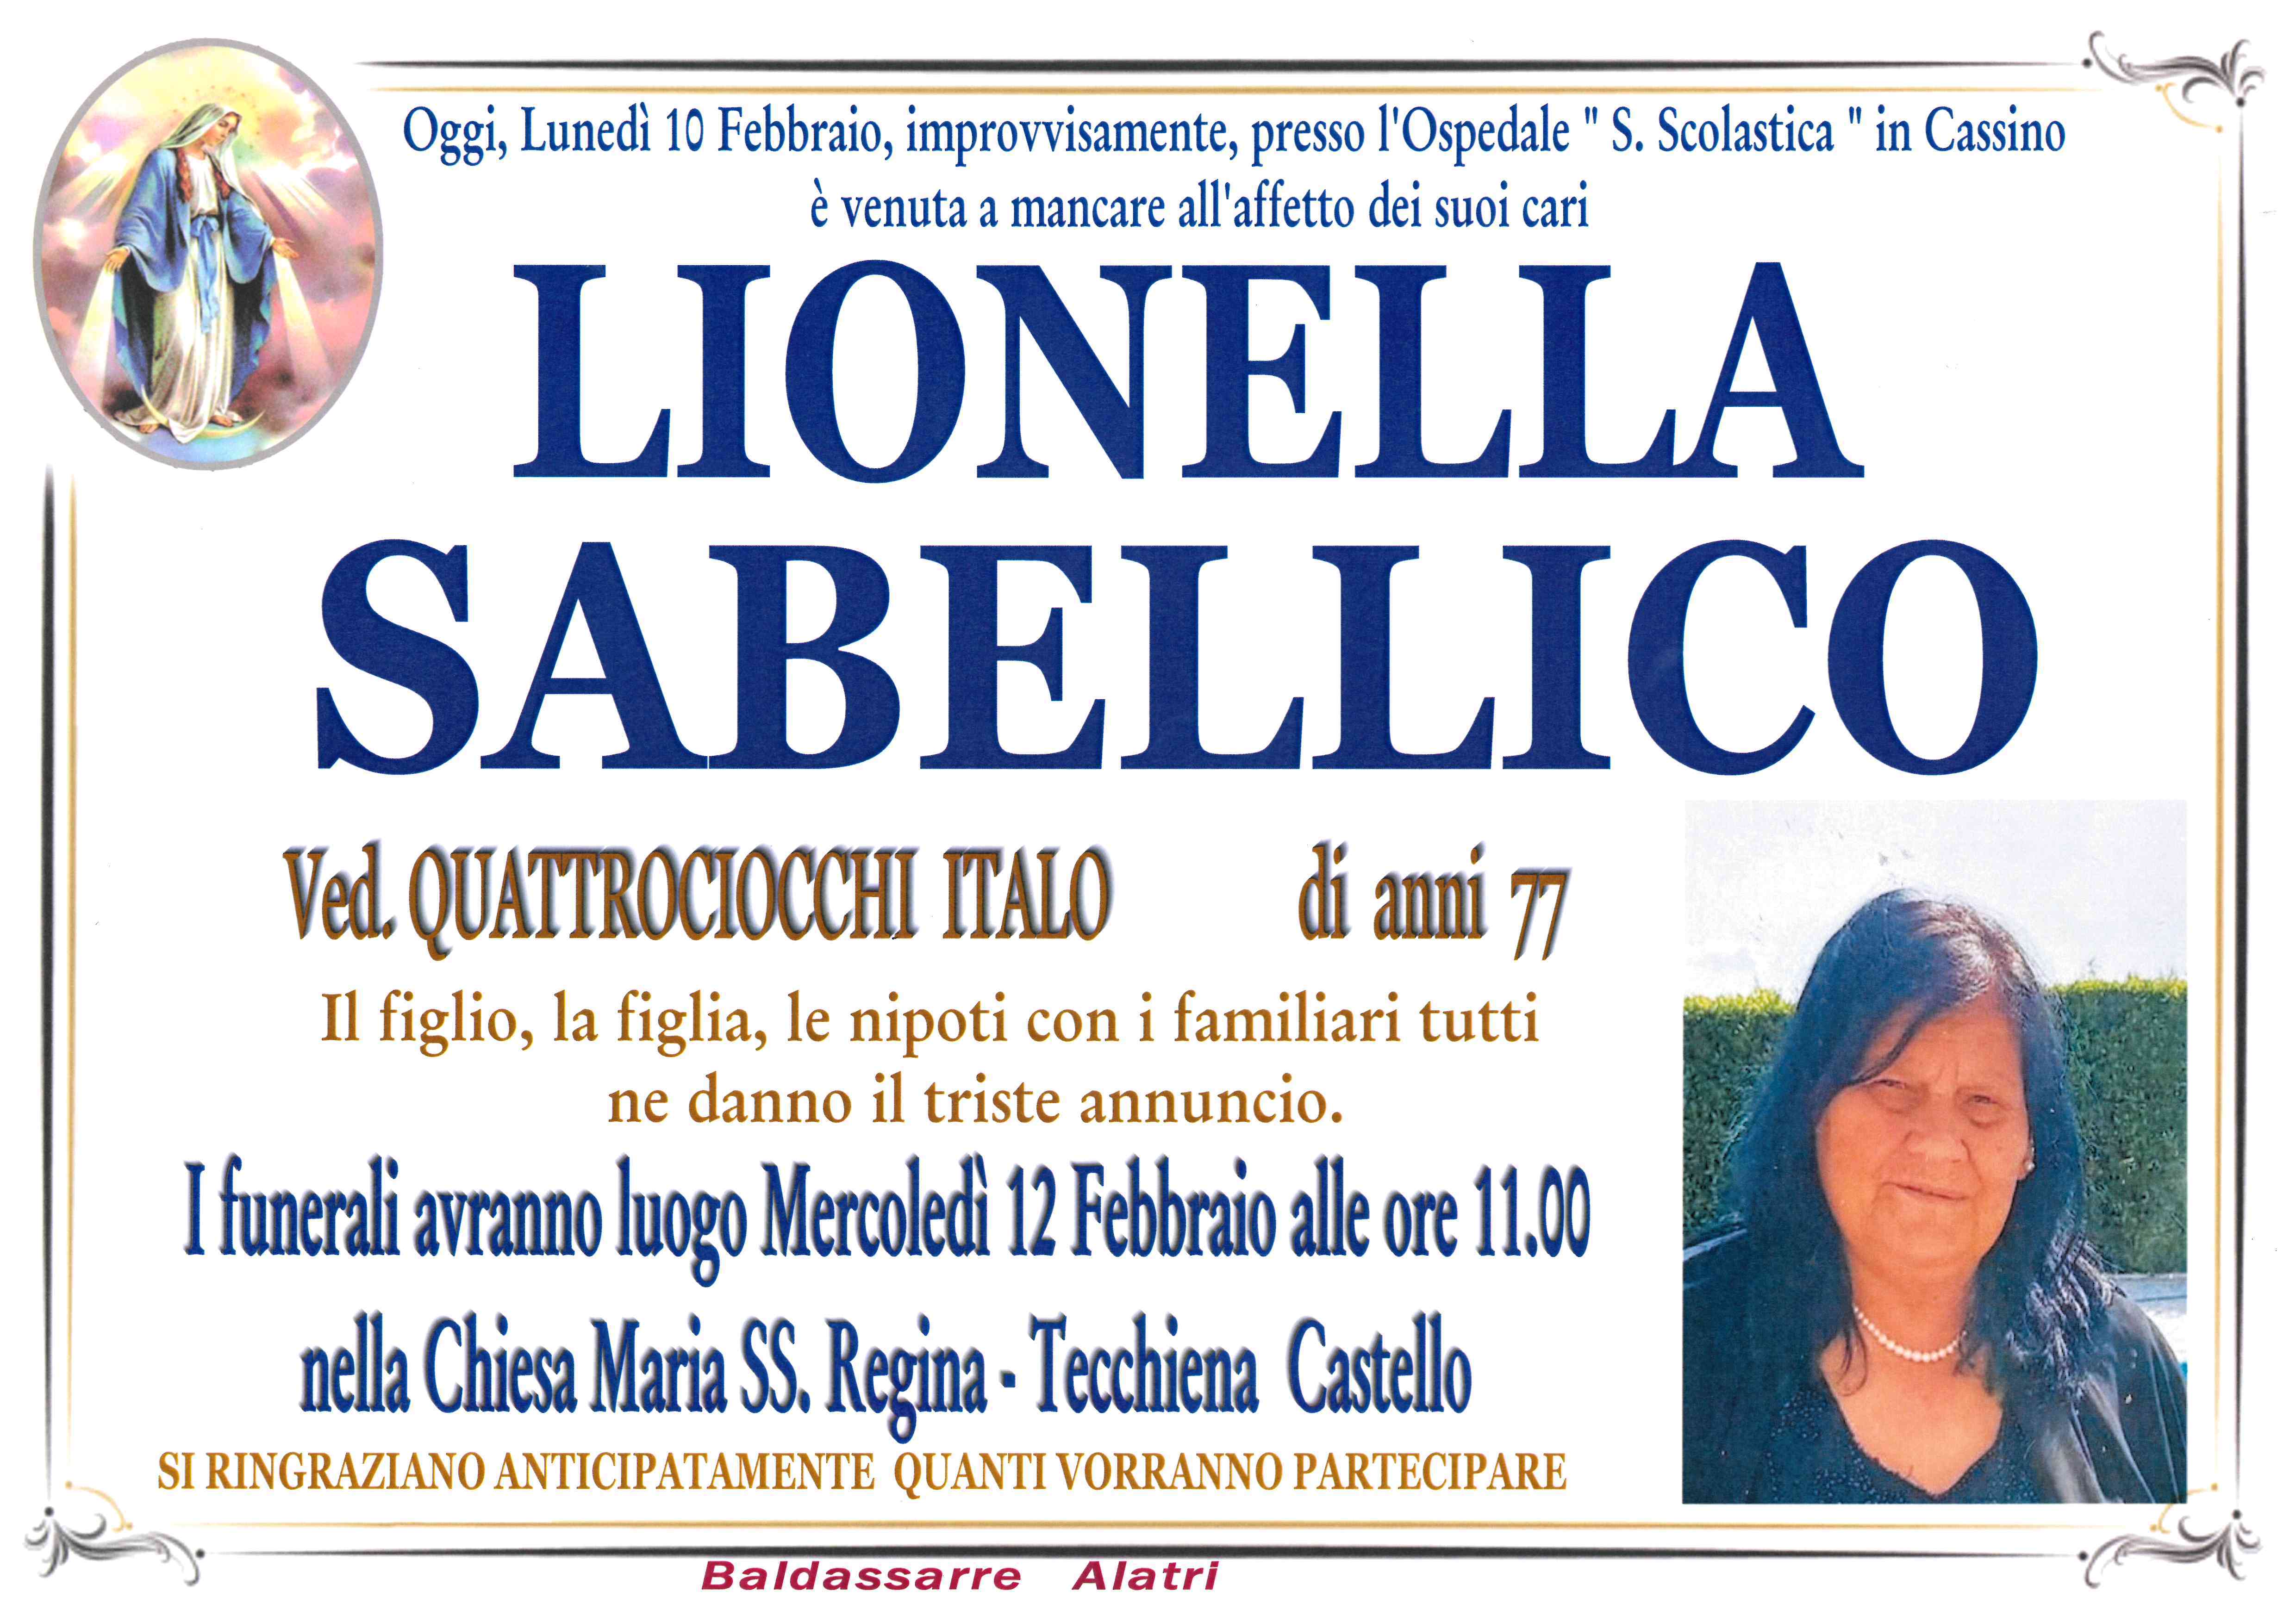 Lionella Sabellico